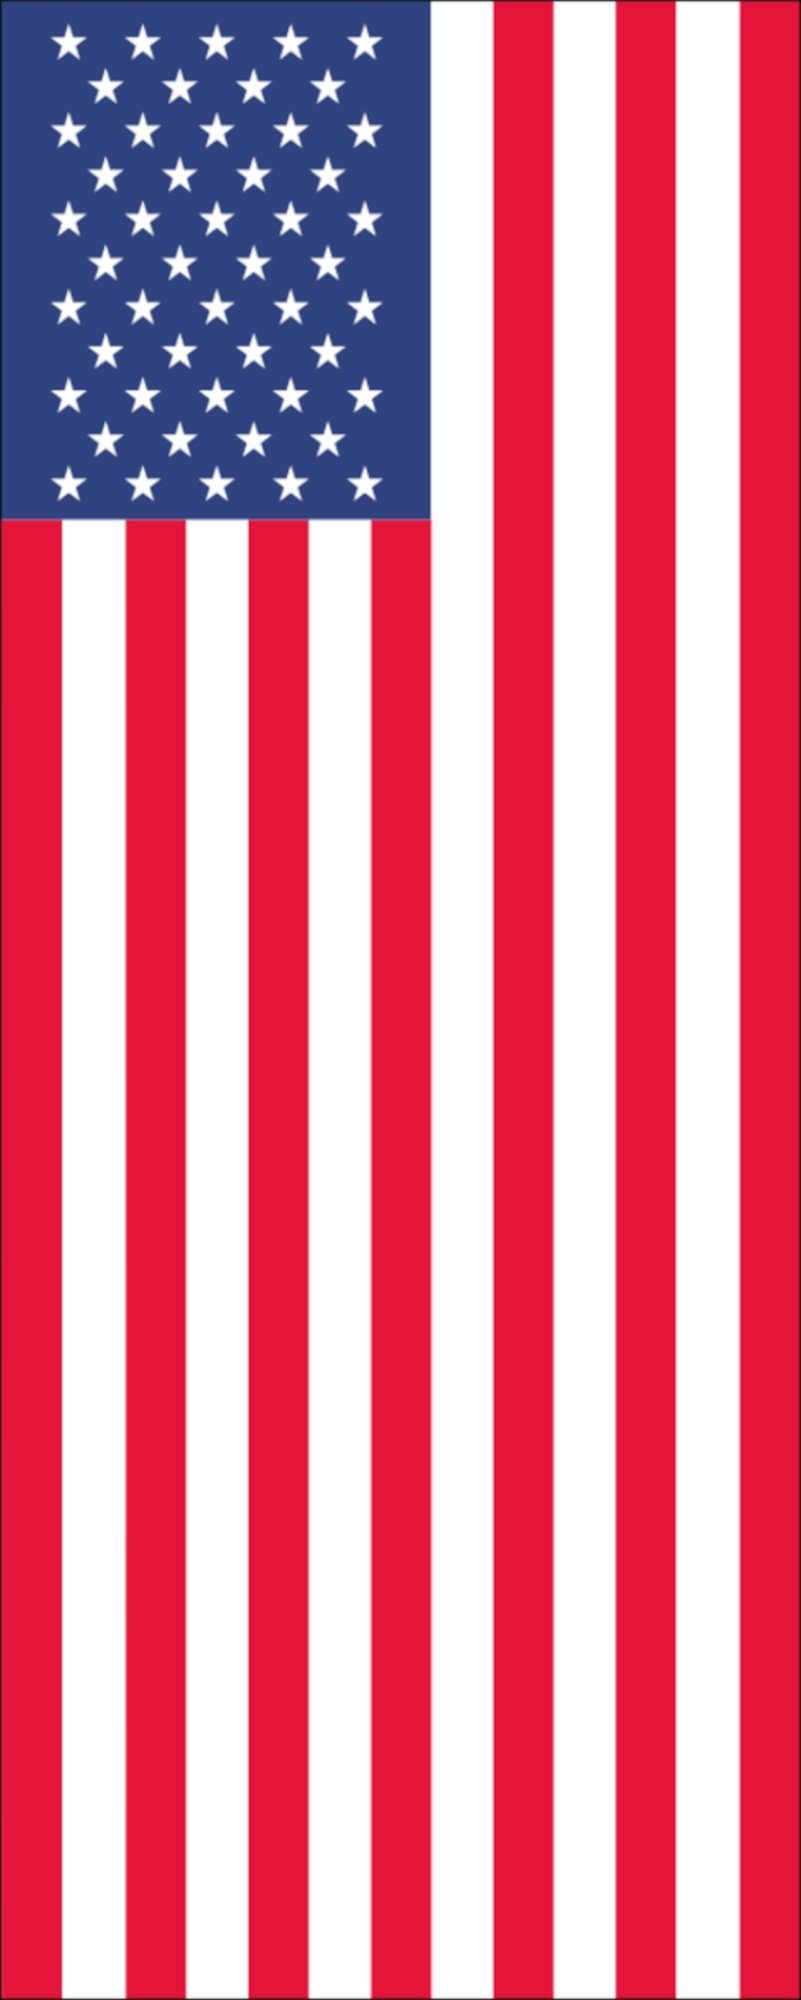 flaggenmeer Flagge USA g/m² Hochformat Flagge 110